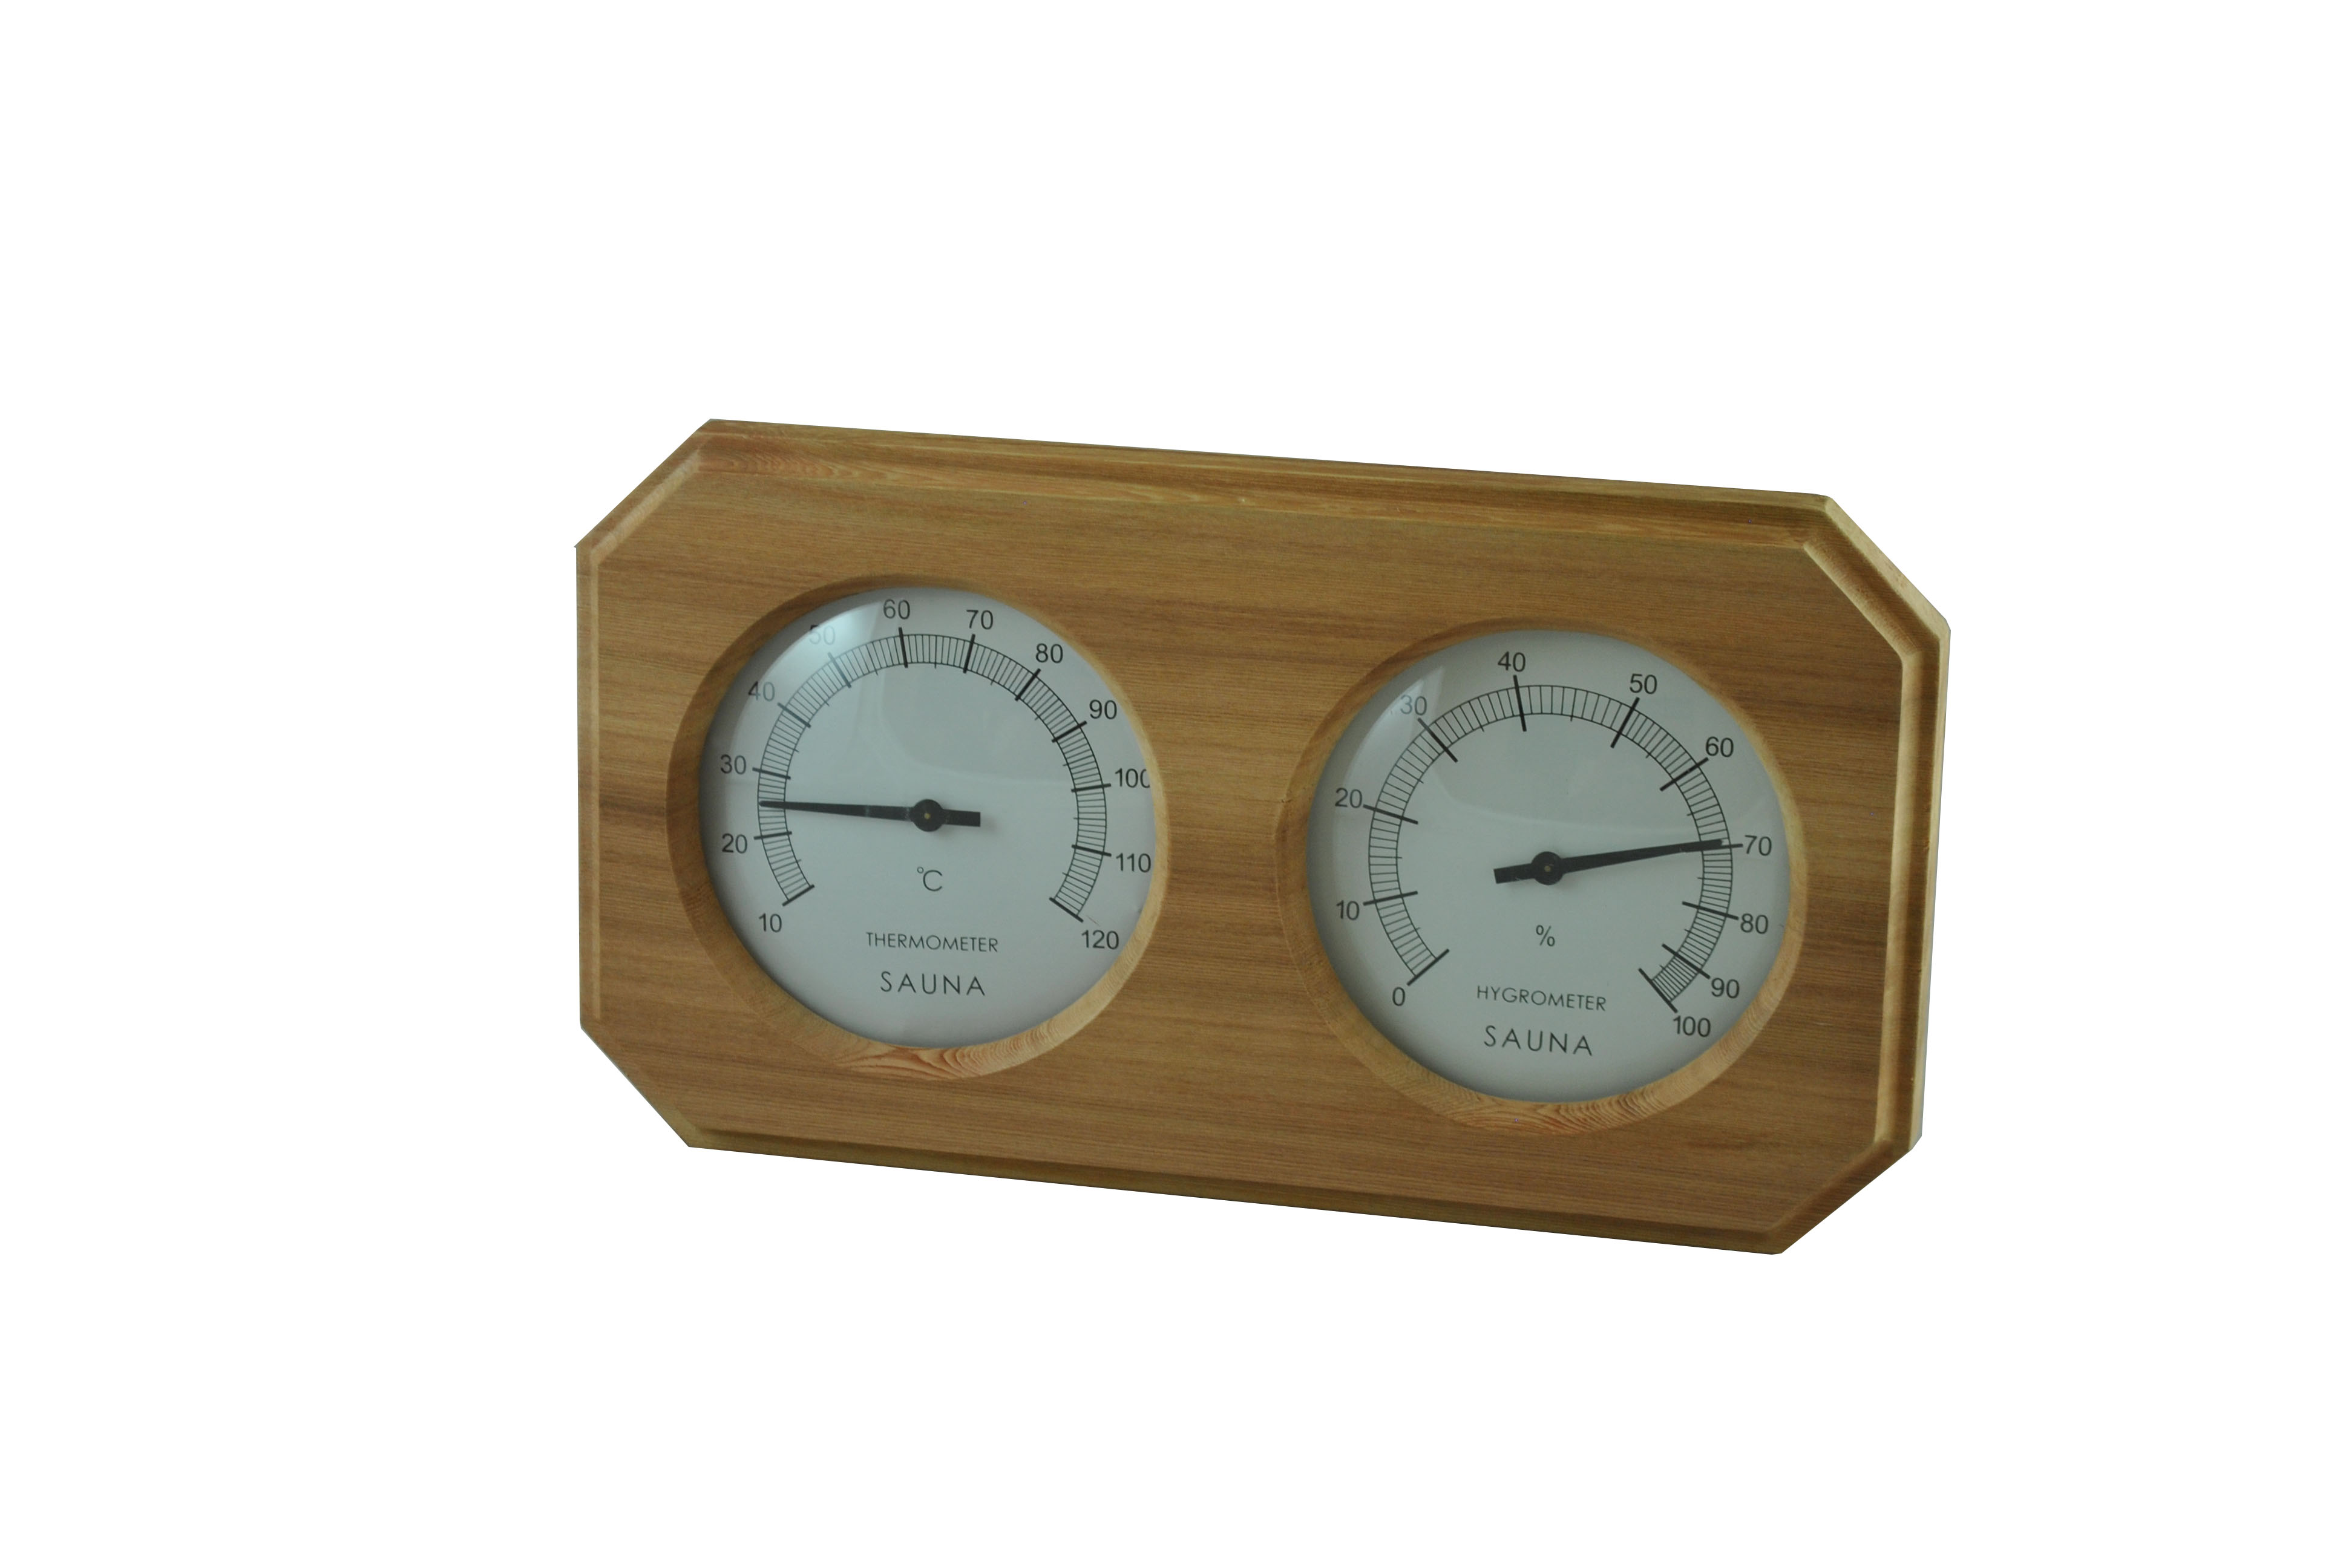 Cedar Sauna Thermometer and Hygrometer- Celsius 760537188991 | eBay